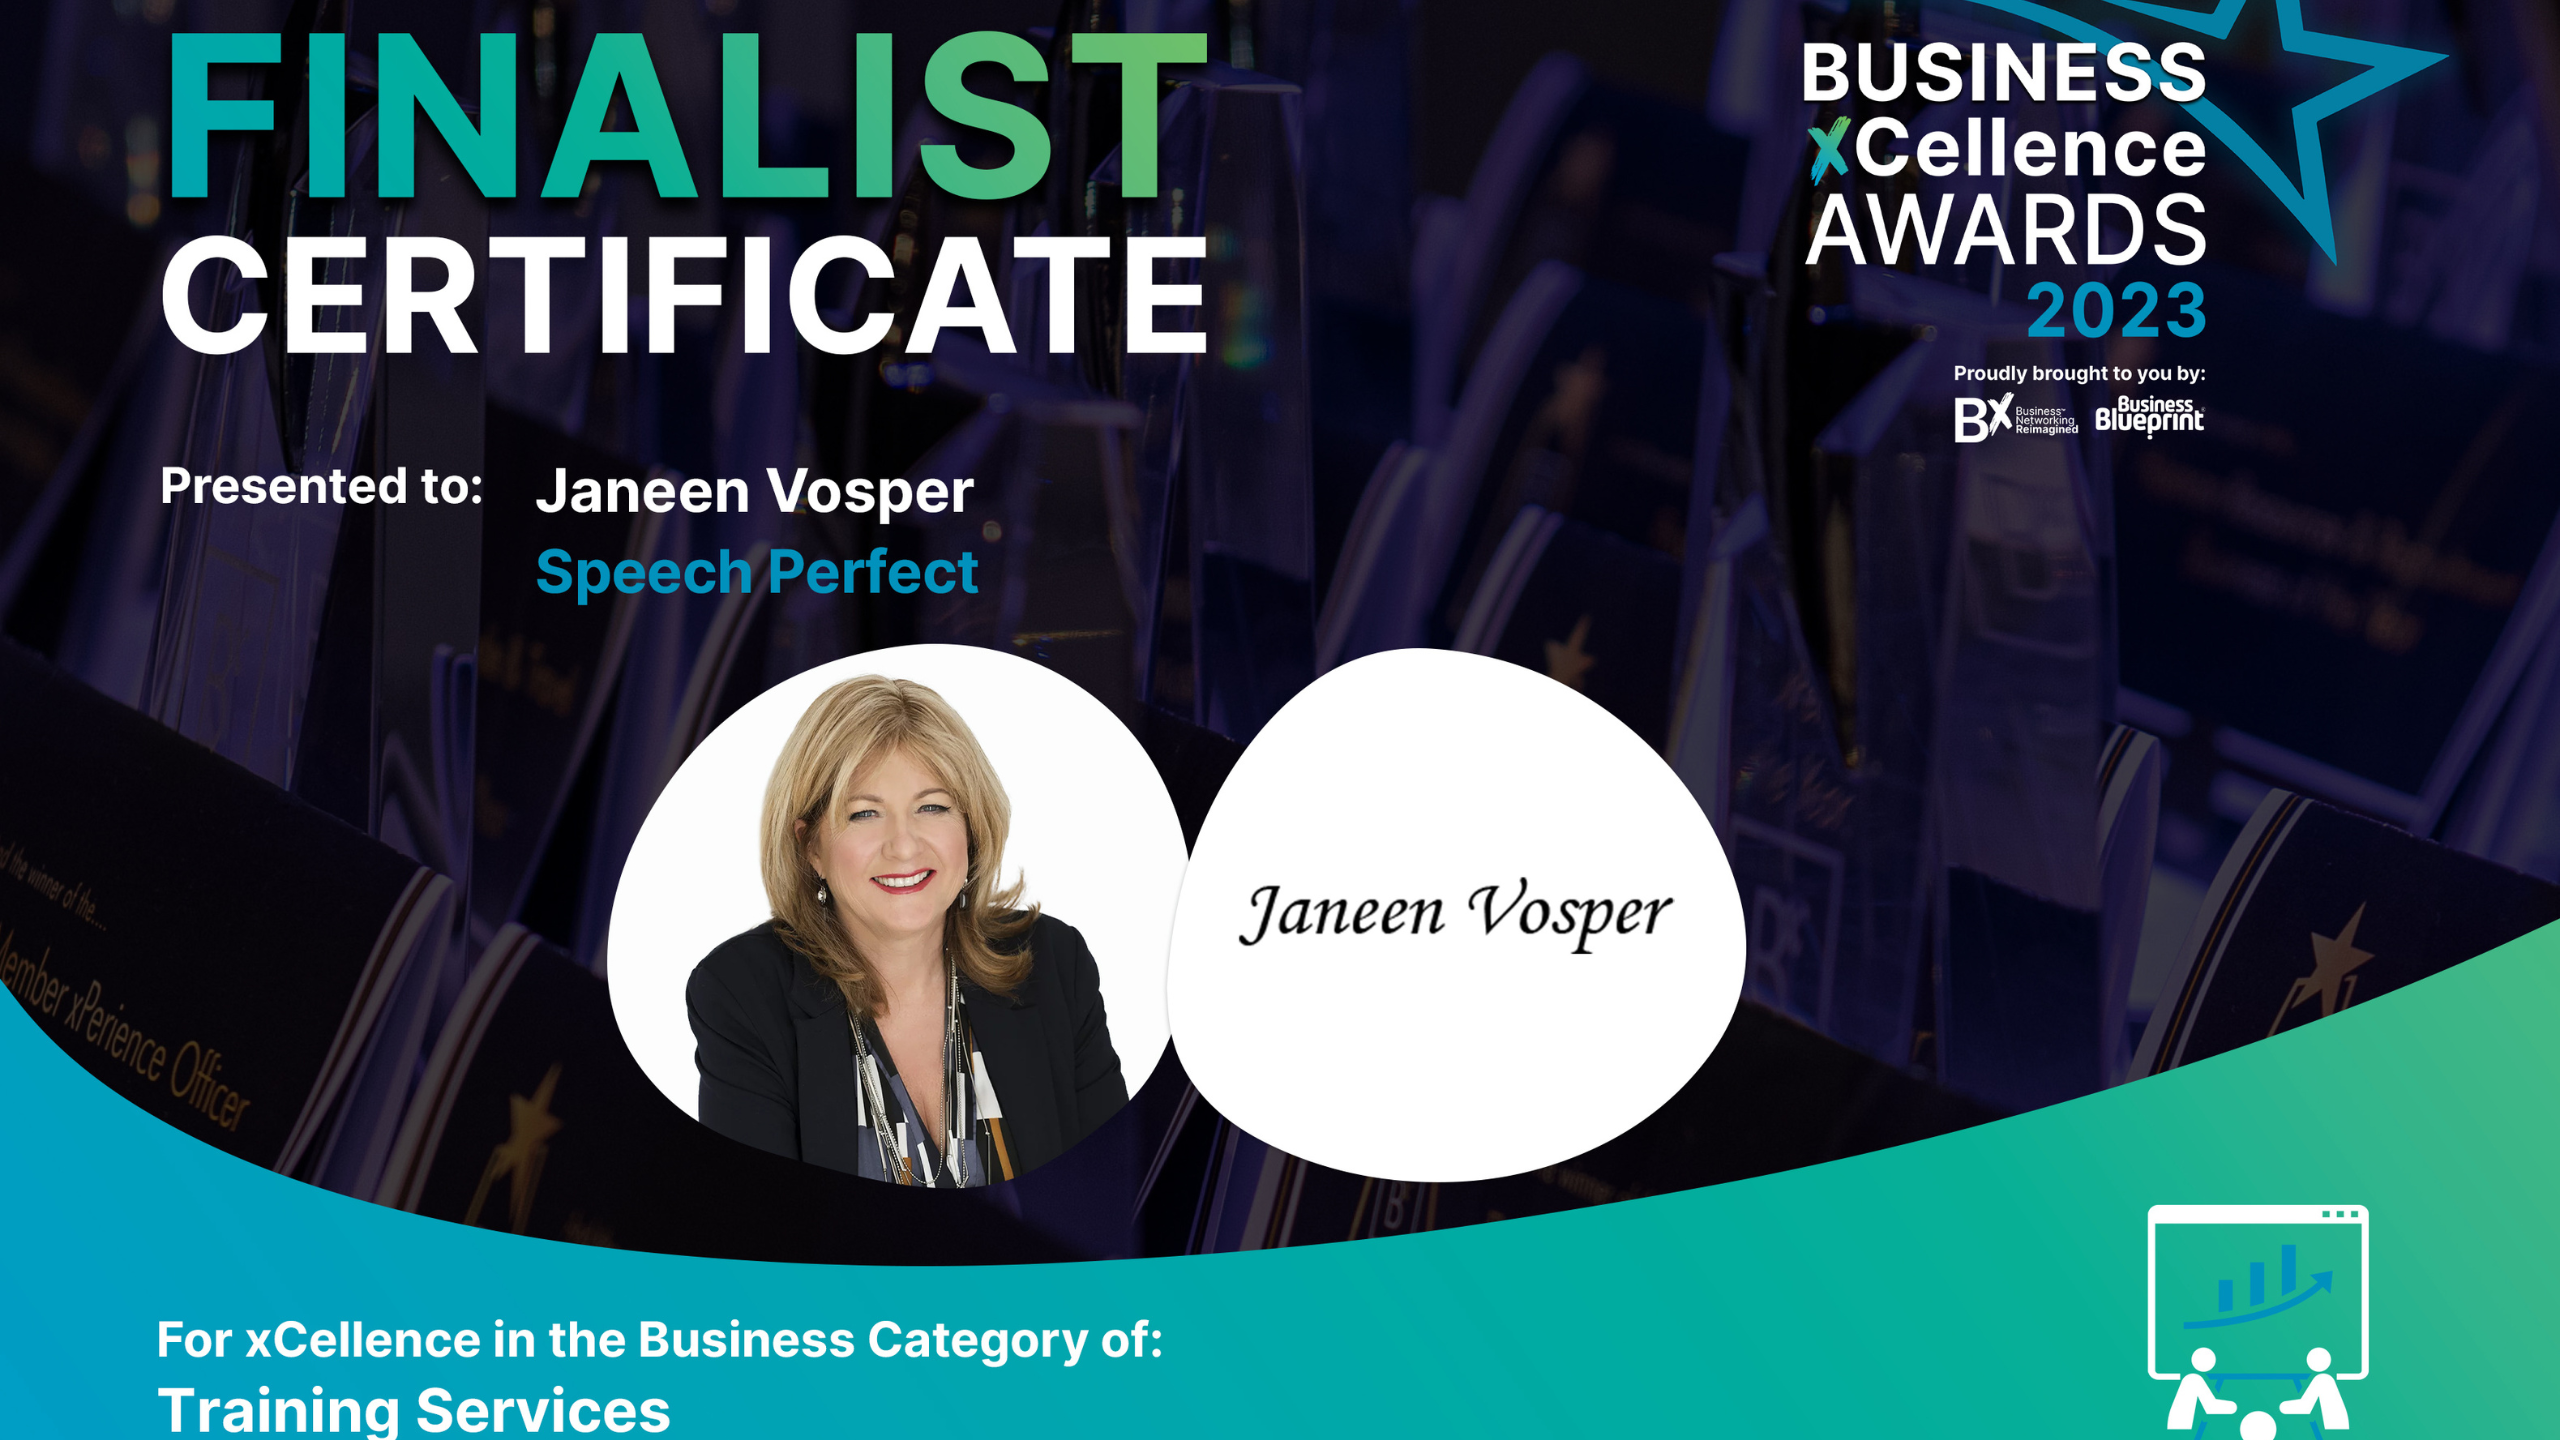 Bx award finalist certificate for Janeen Vosper